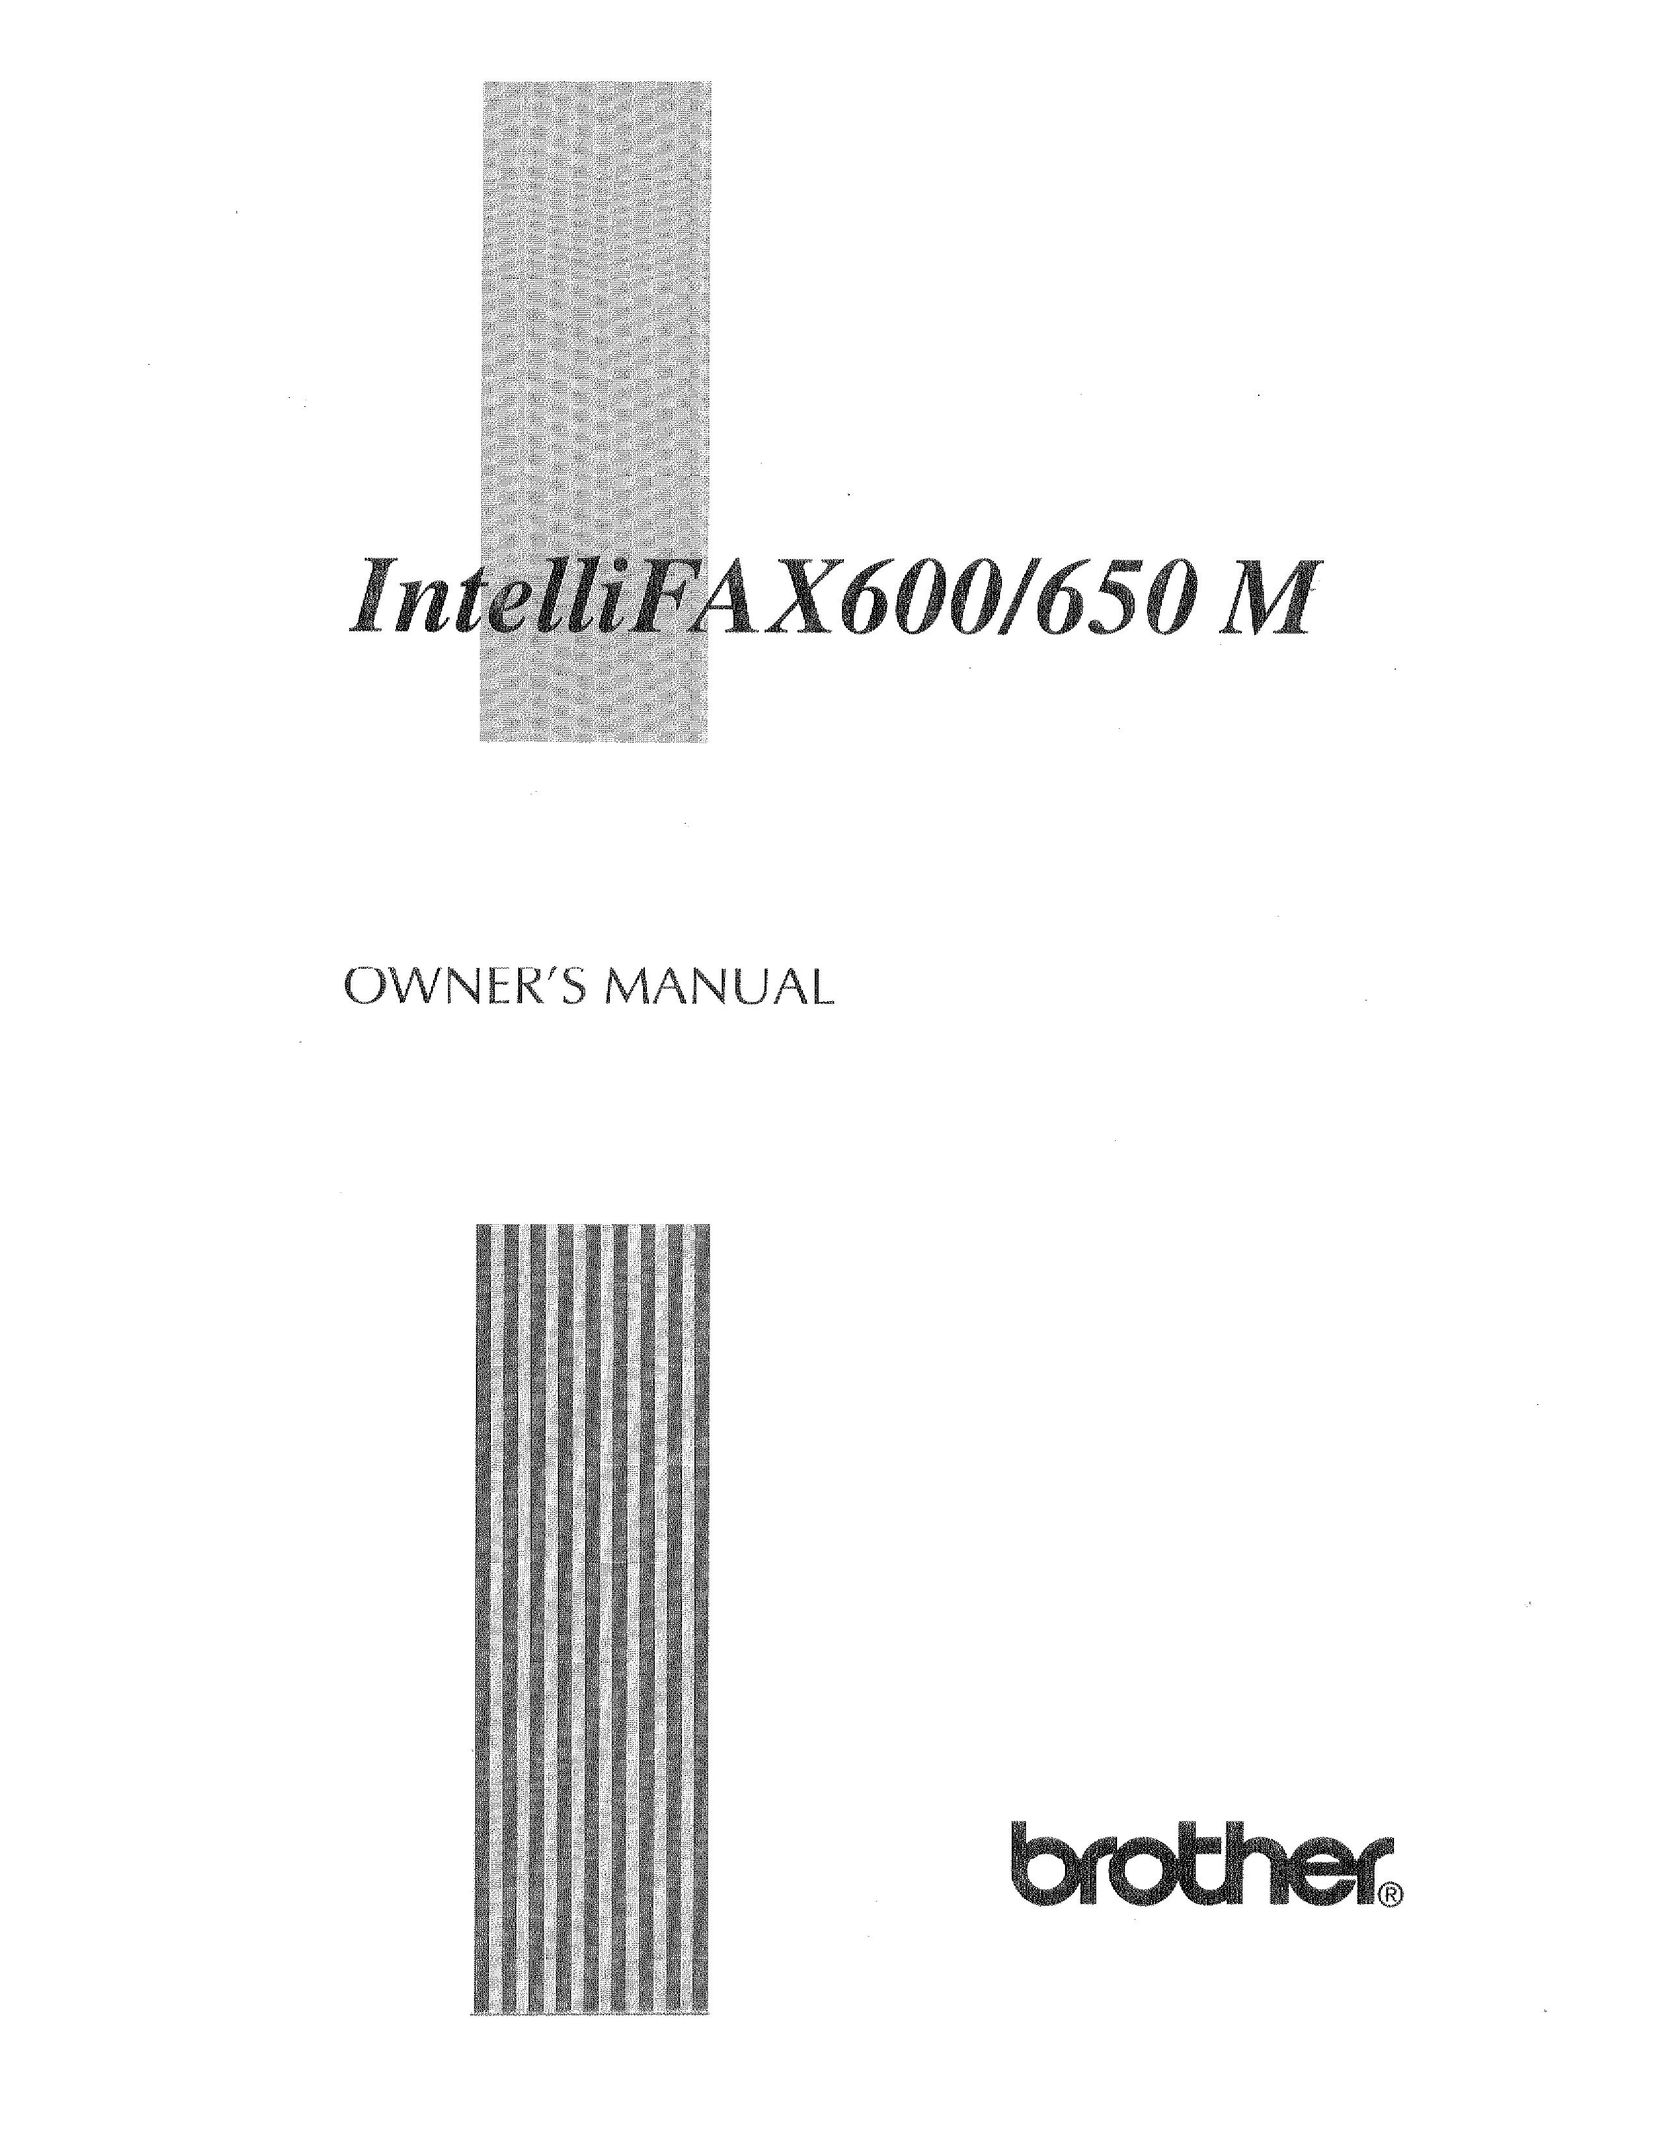 Brother 650 M Fax Machine User Manual